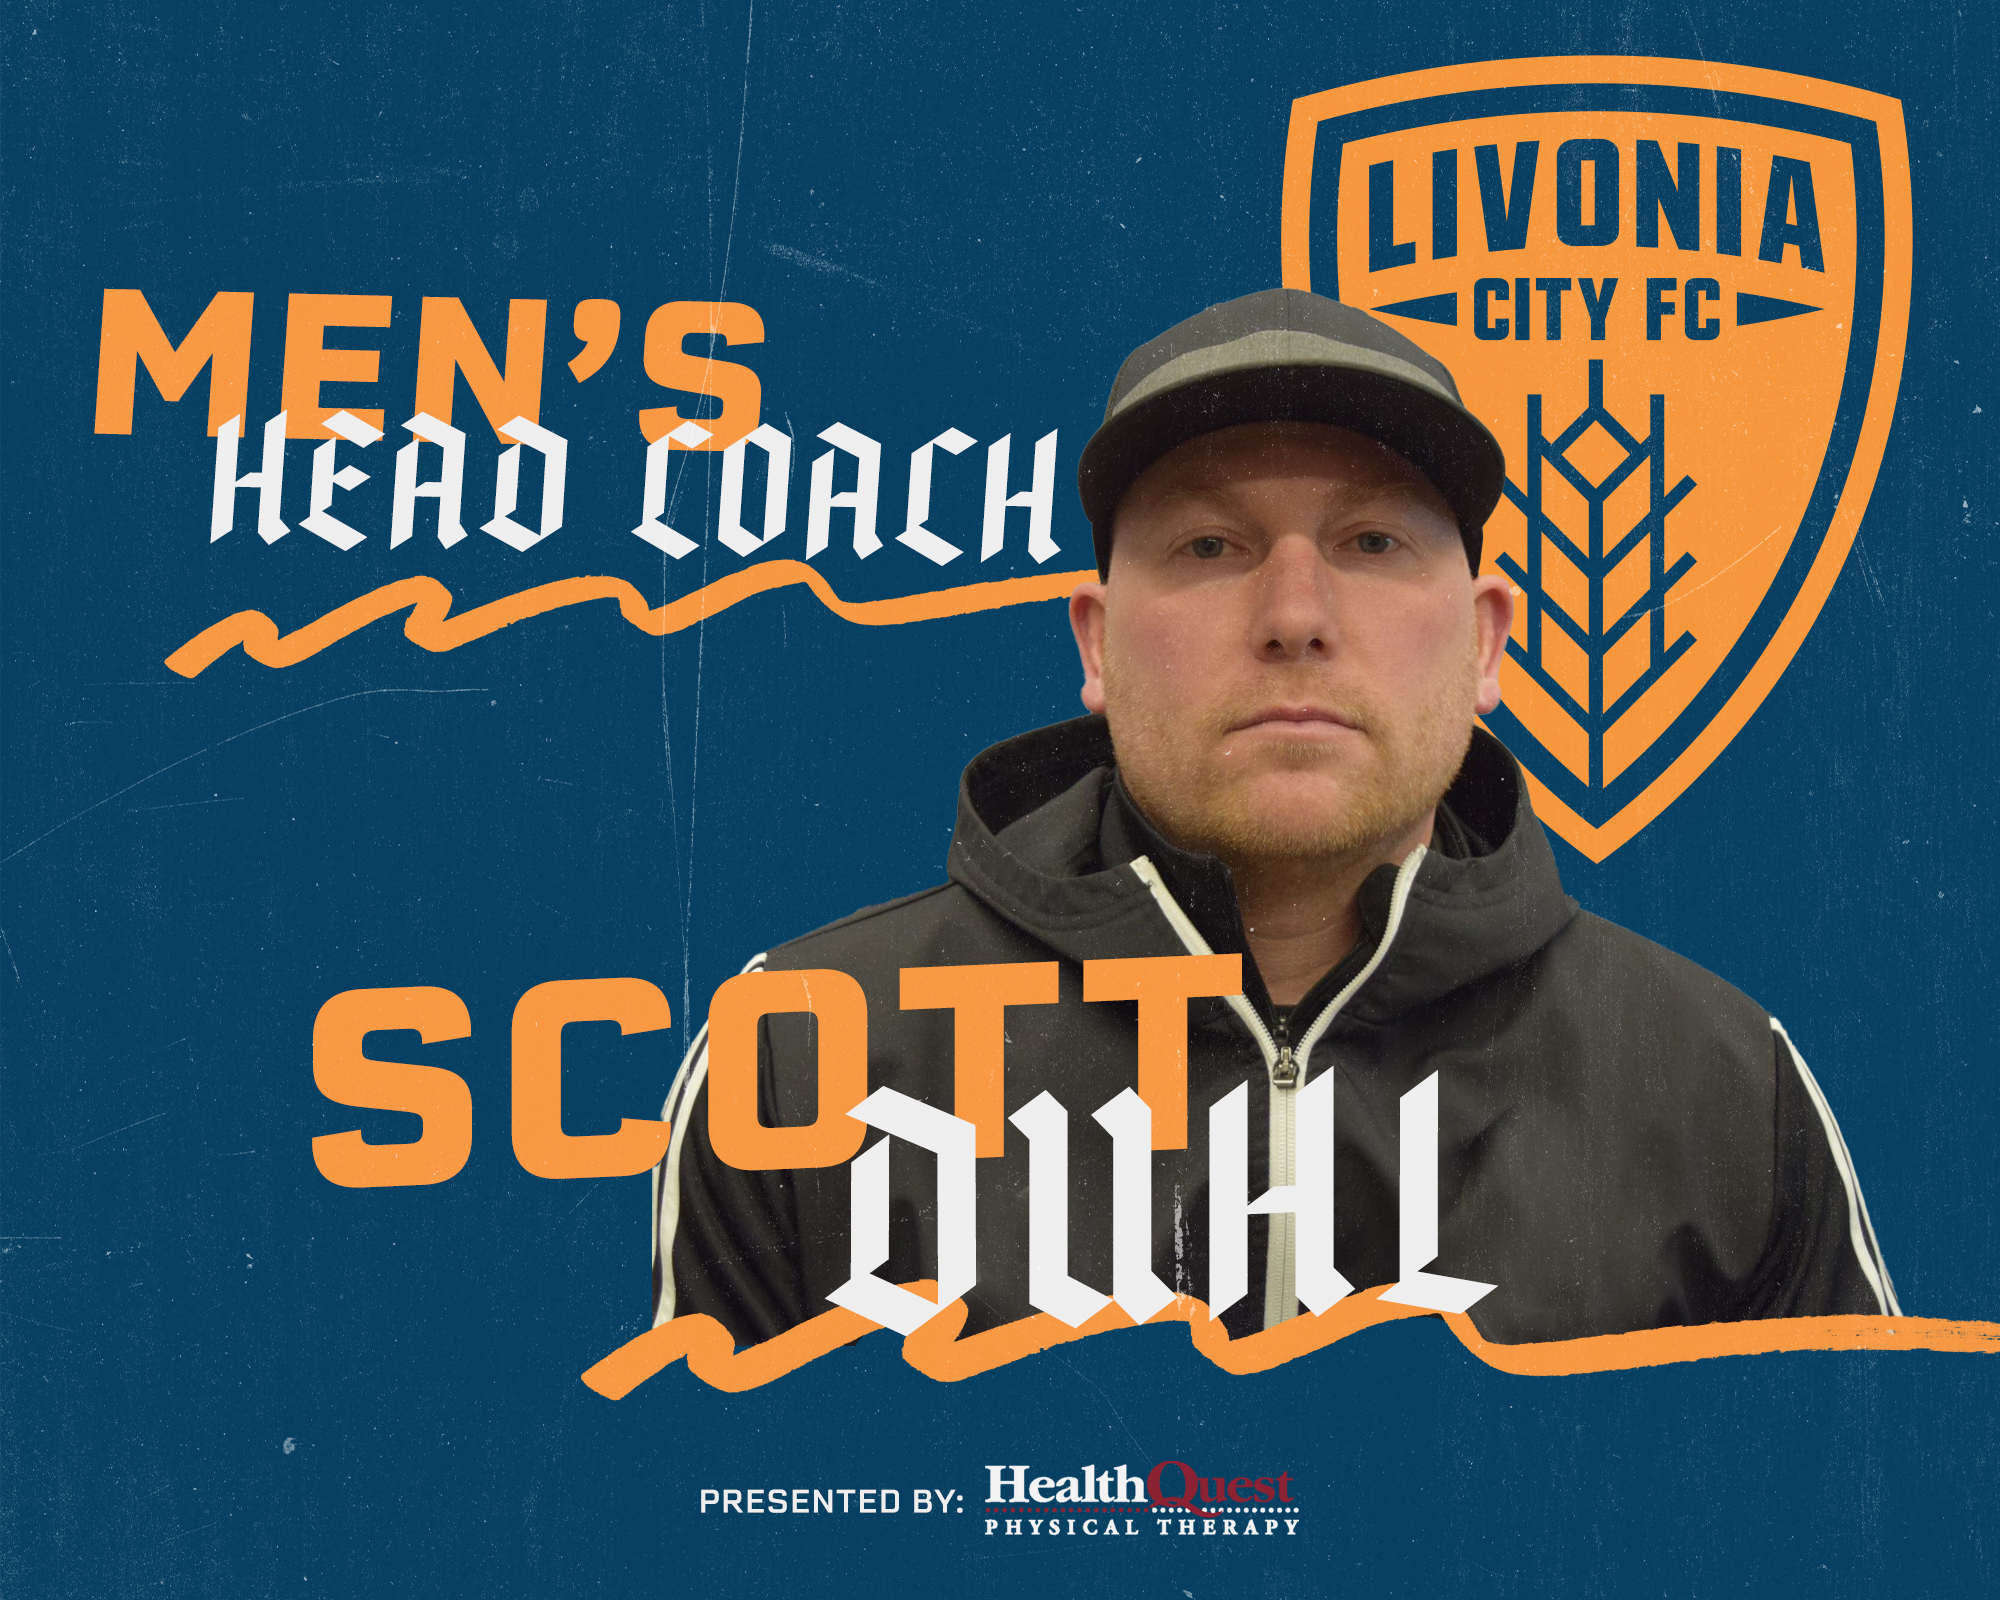 Scott Duhl Named as Men’s Head Coach